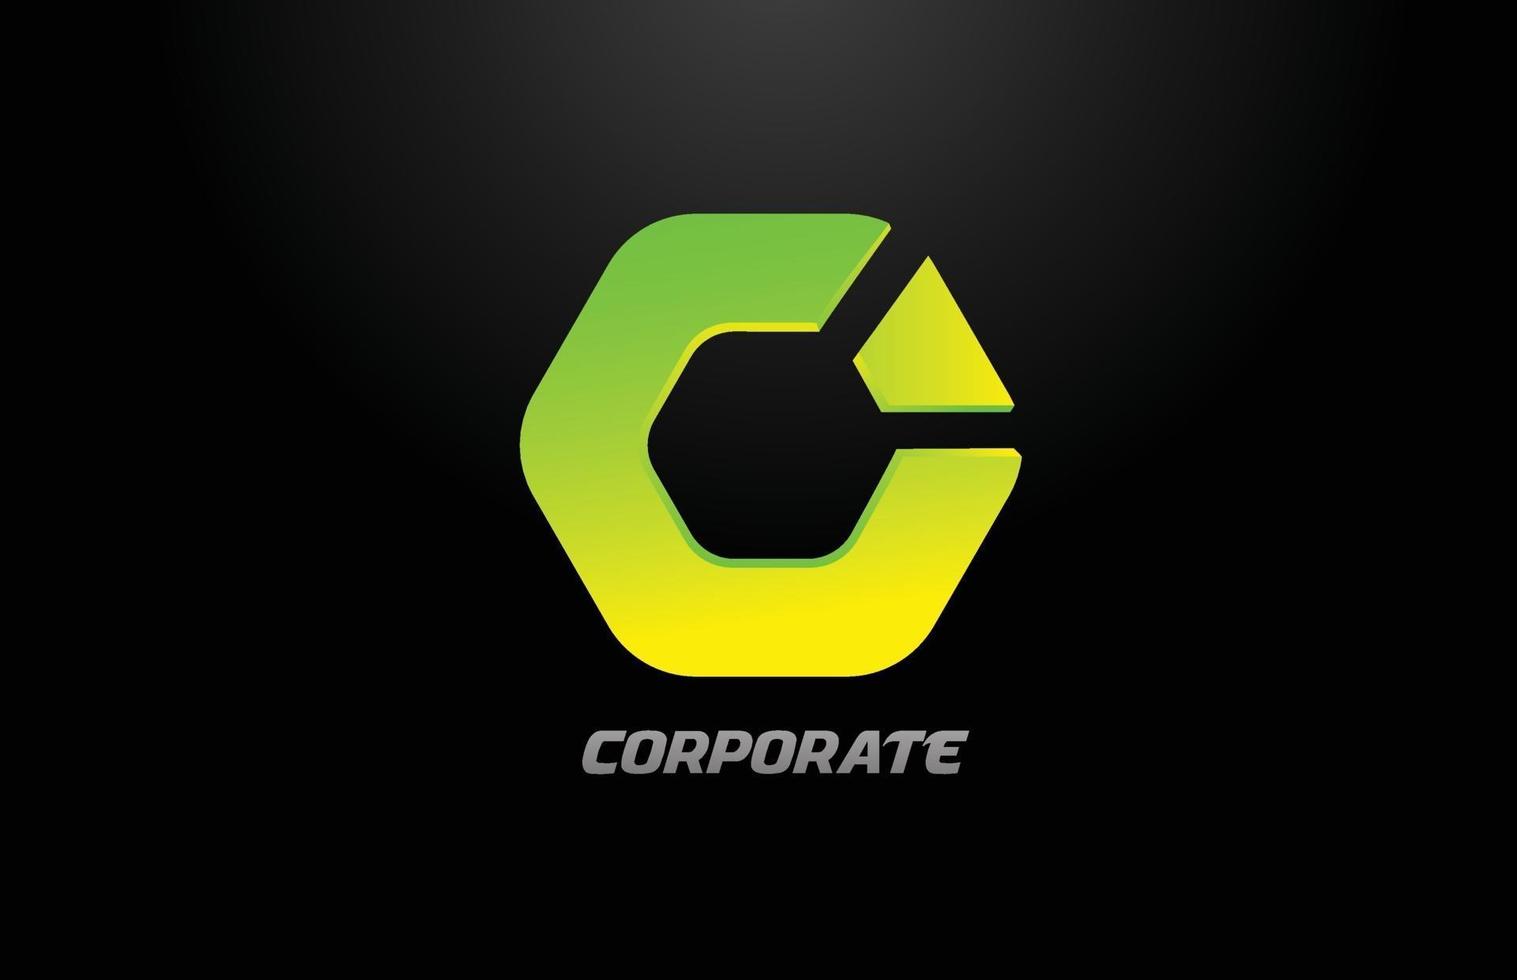 yellow green corporate polygon business logo icon design for company vector